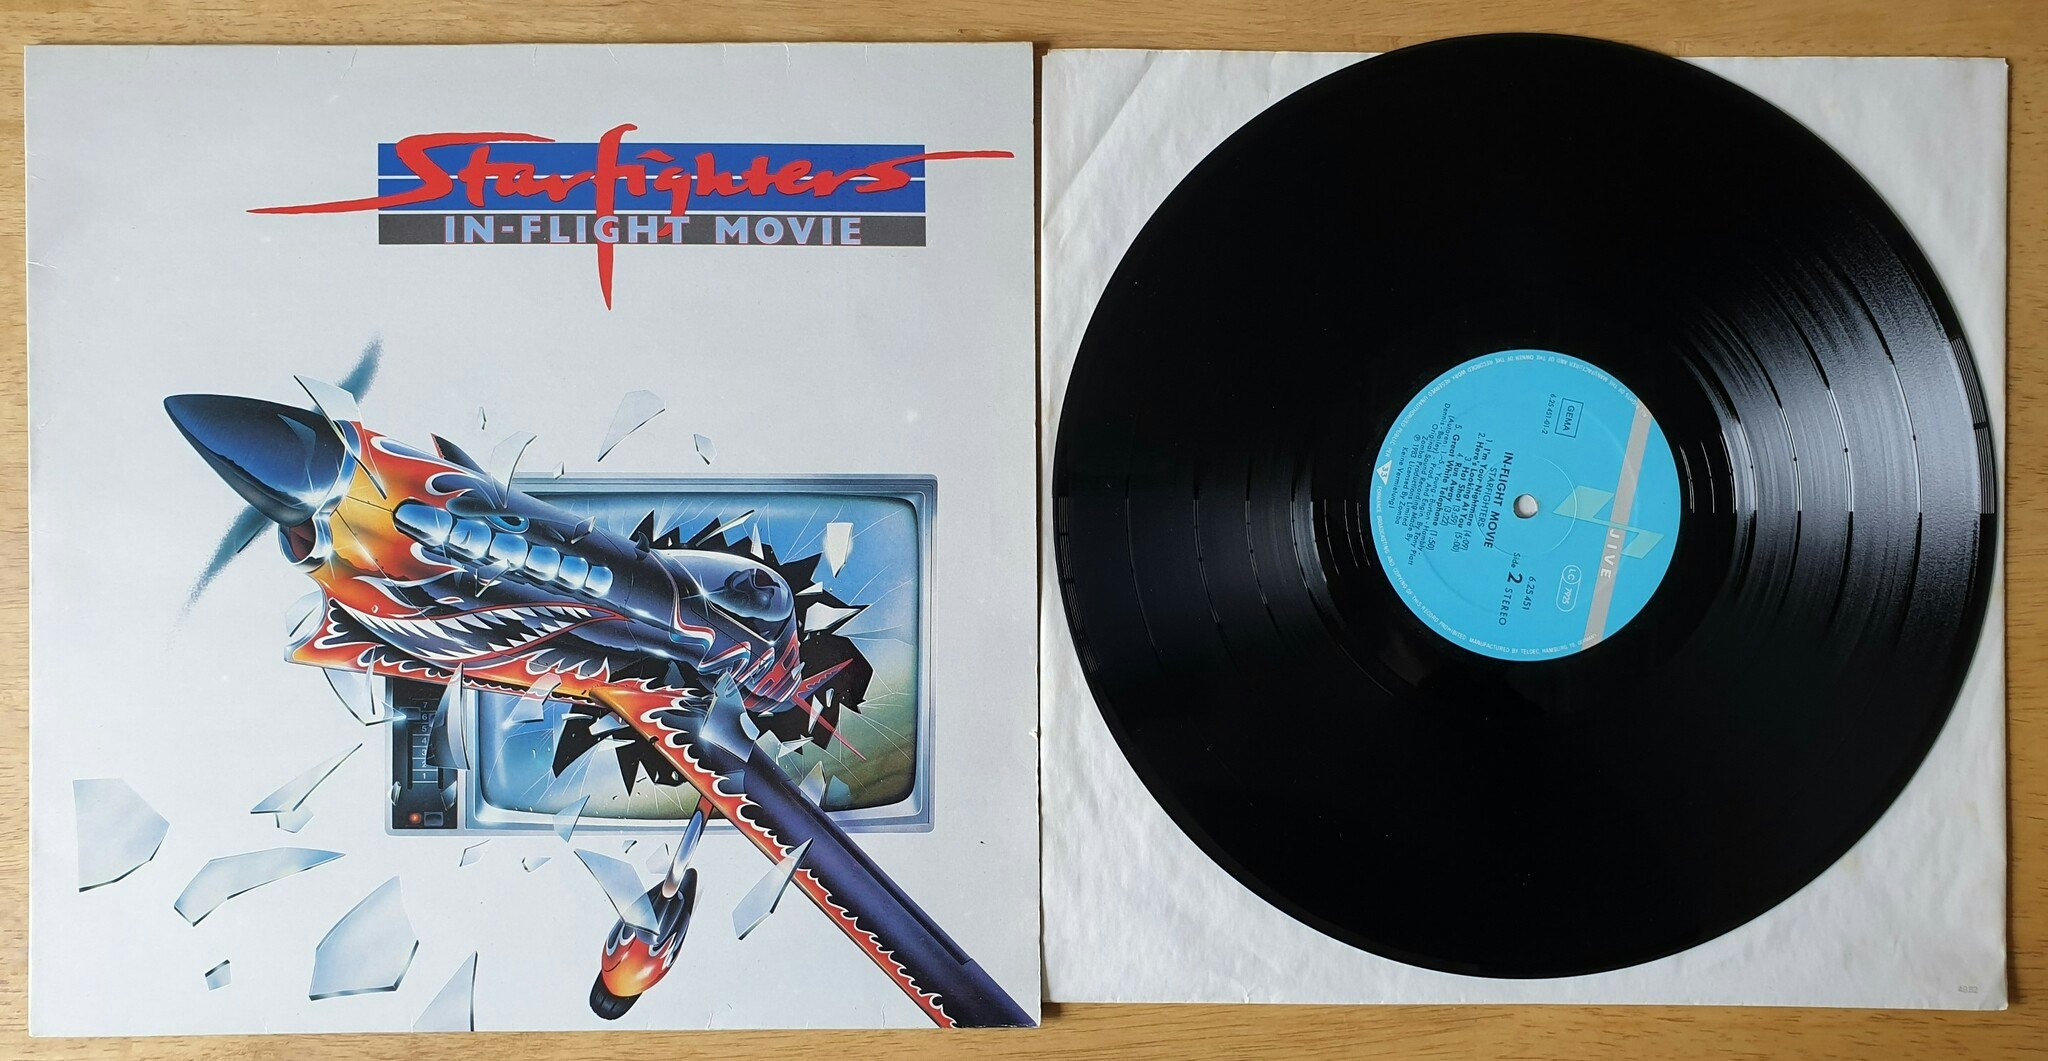 Starfighters, In-flight movie. Vinyl LP